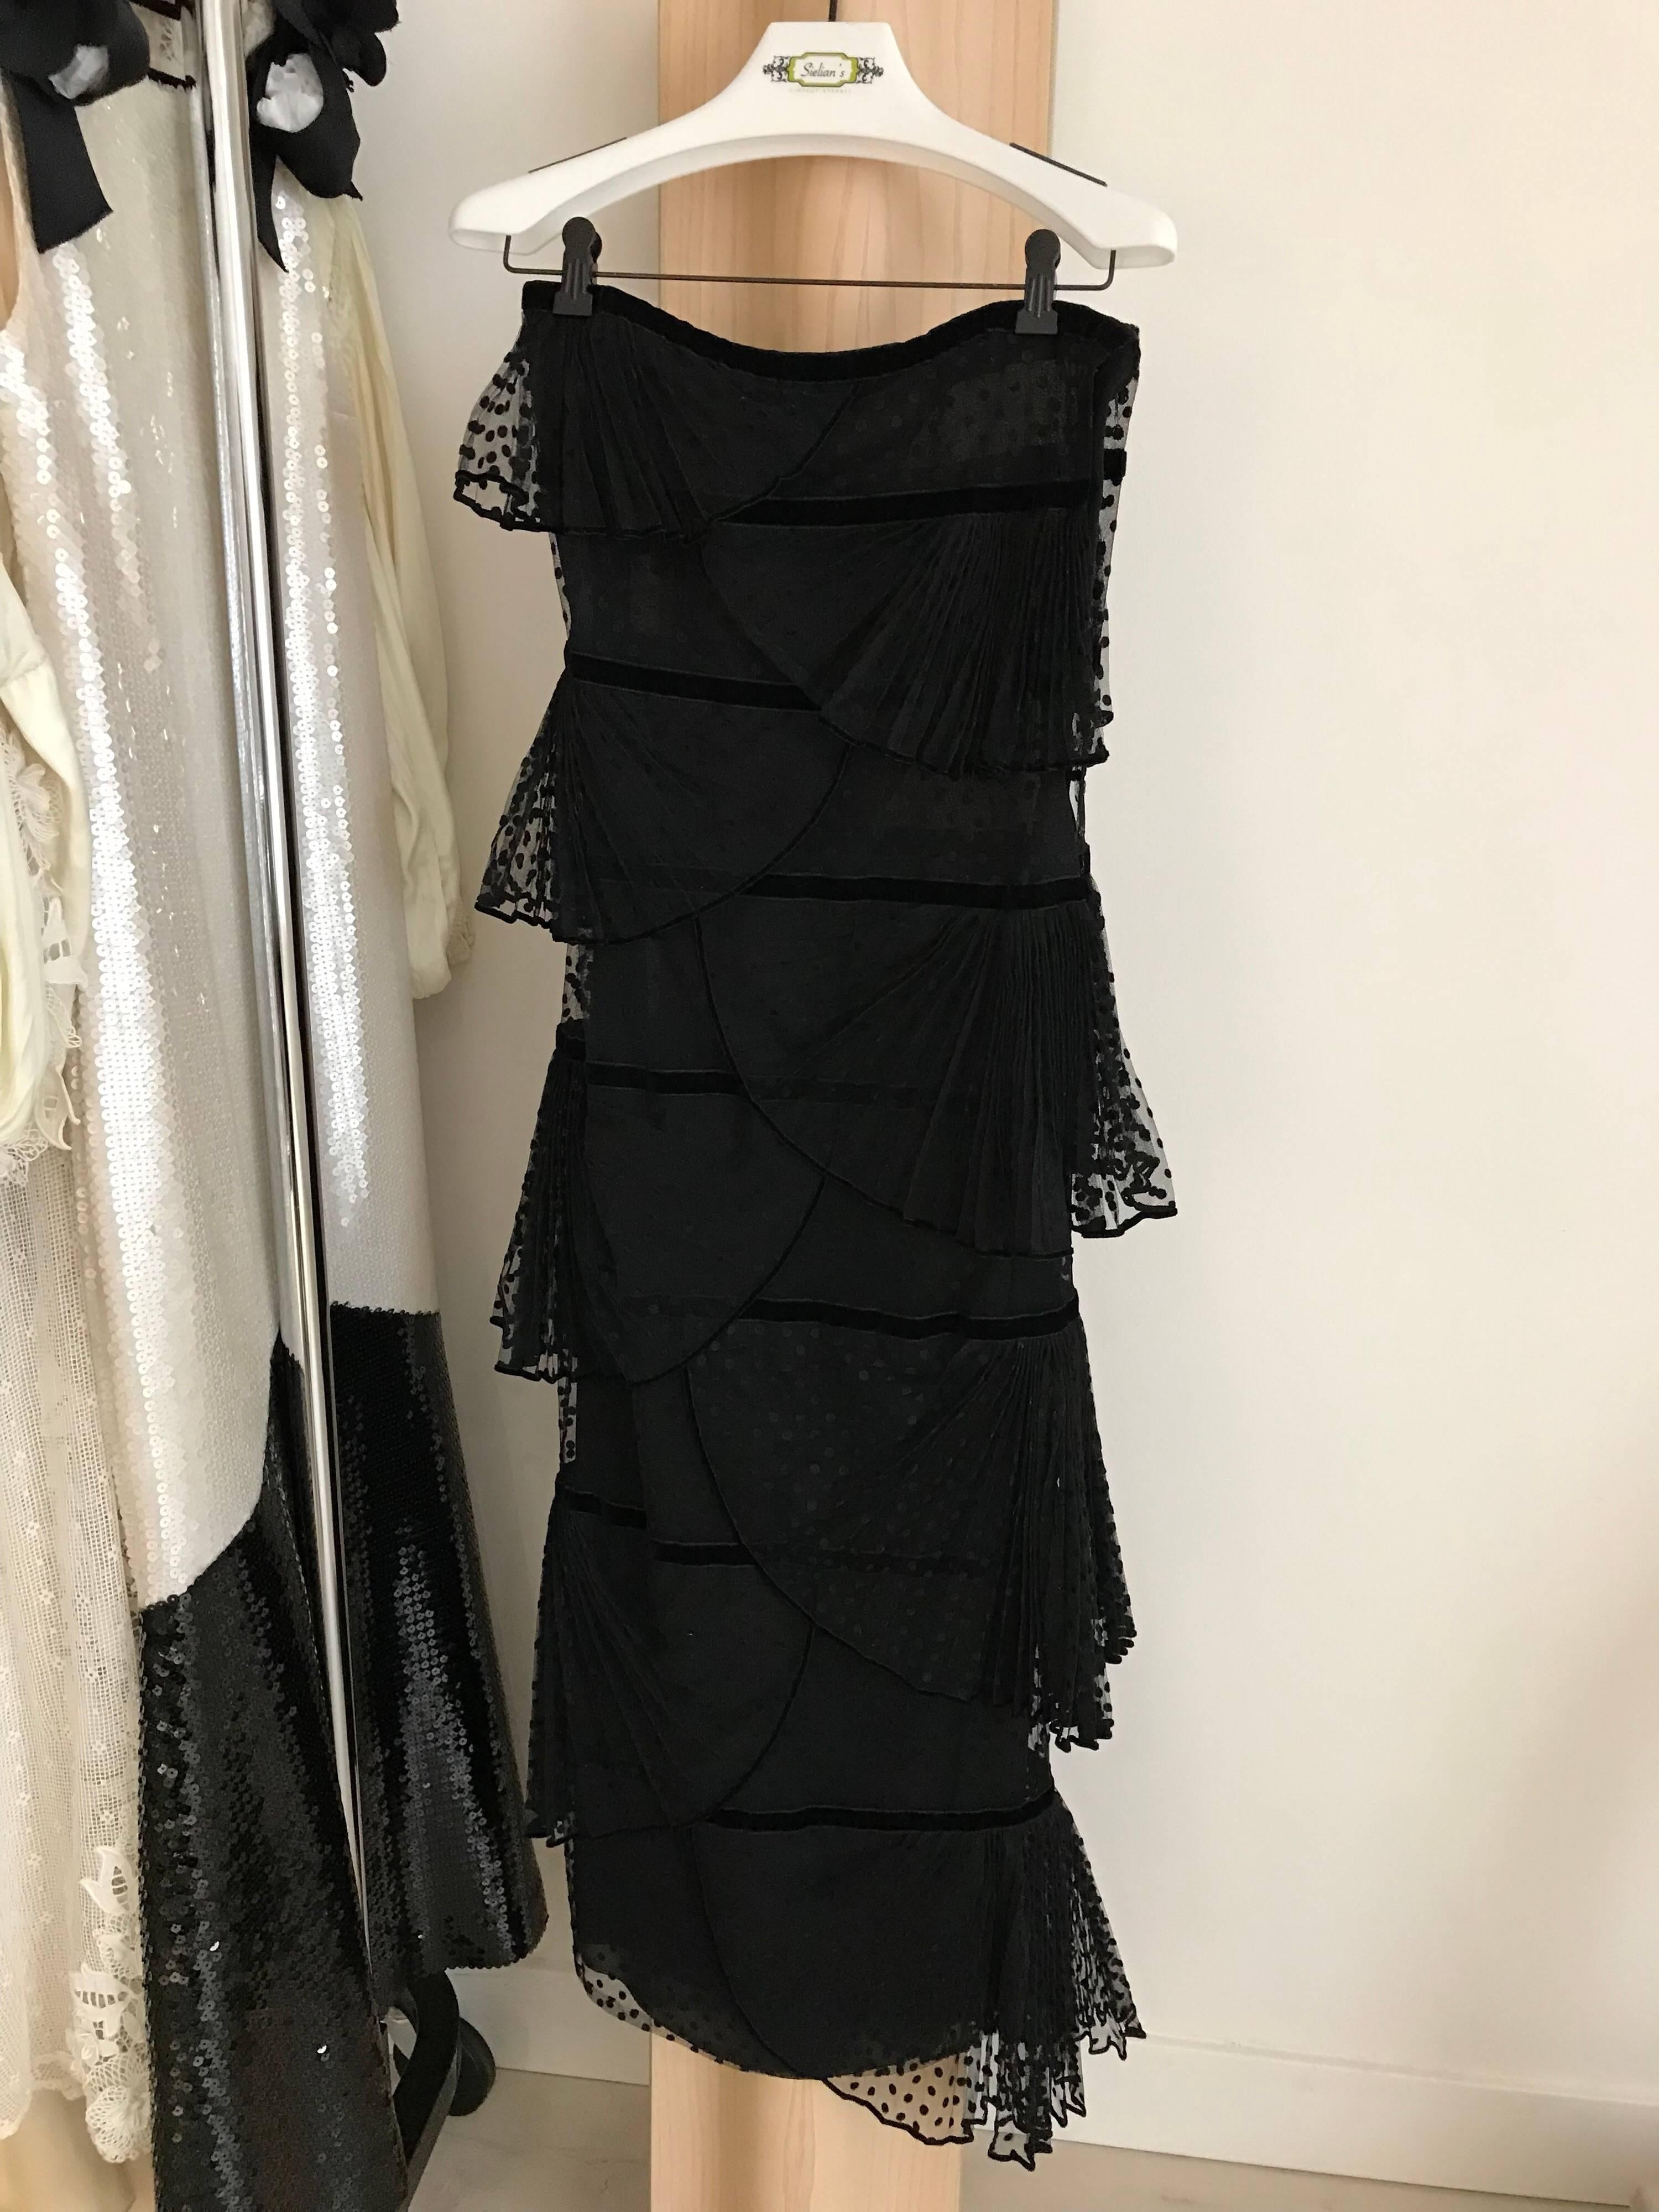  Christian Dior by Gianfranco Ferre Black Lace Strapless Velvet flocked Gown   6